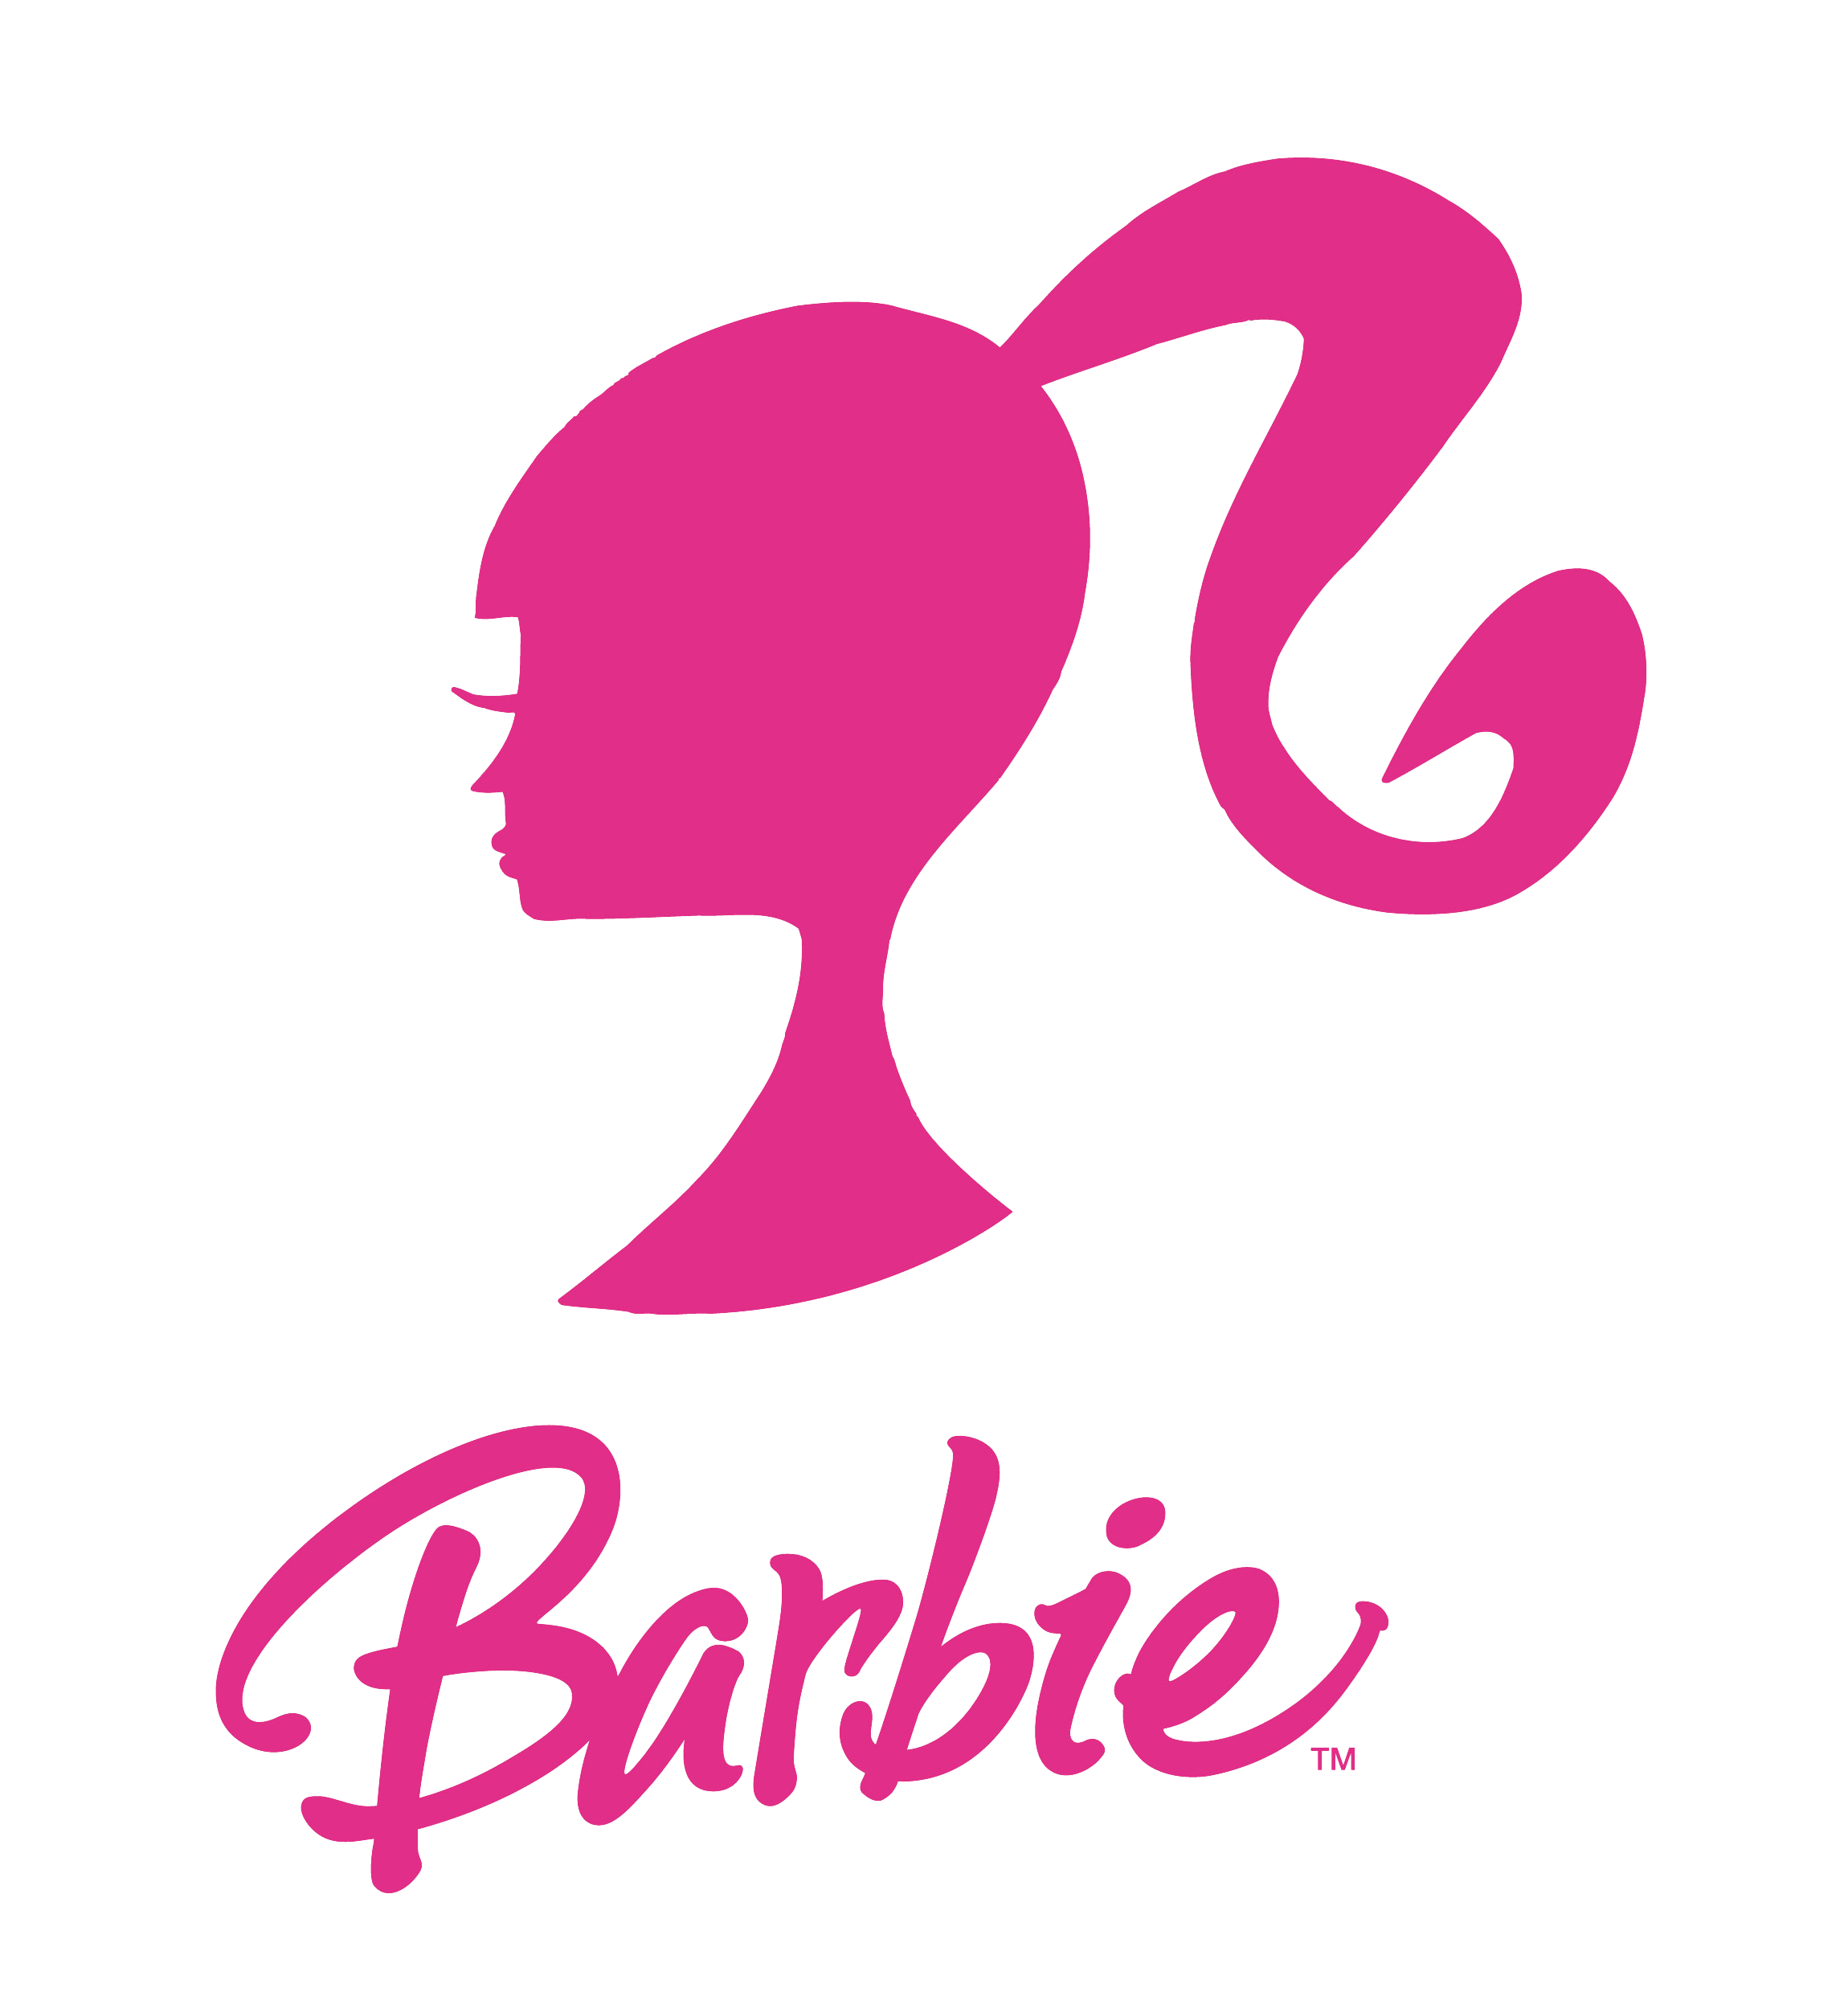 Download Barbie Logo Transparent Image HQ PNG Image in different